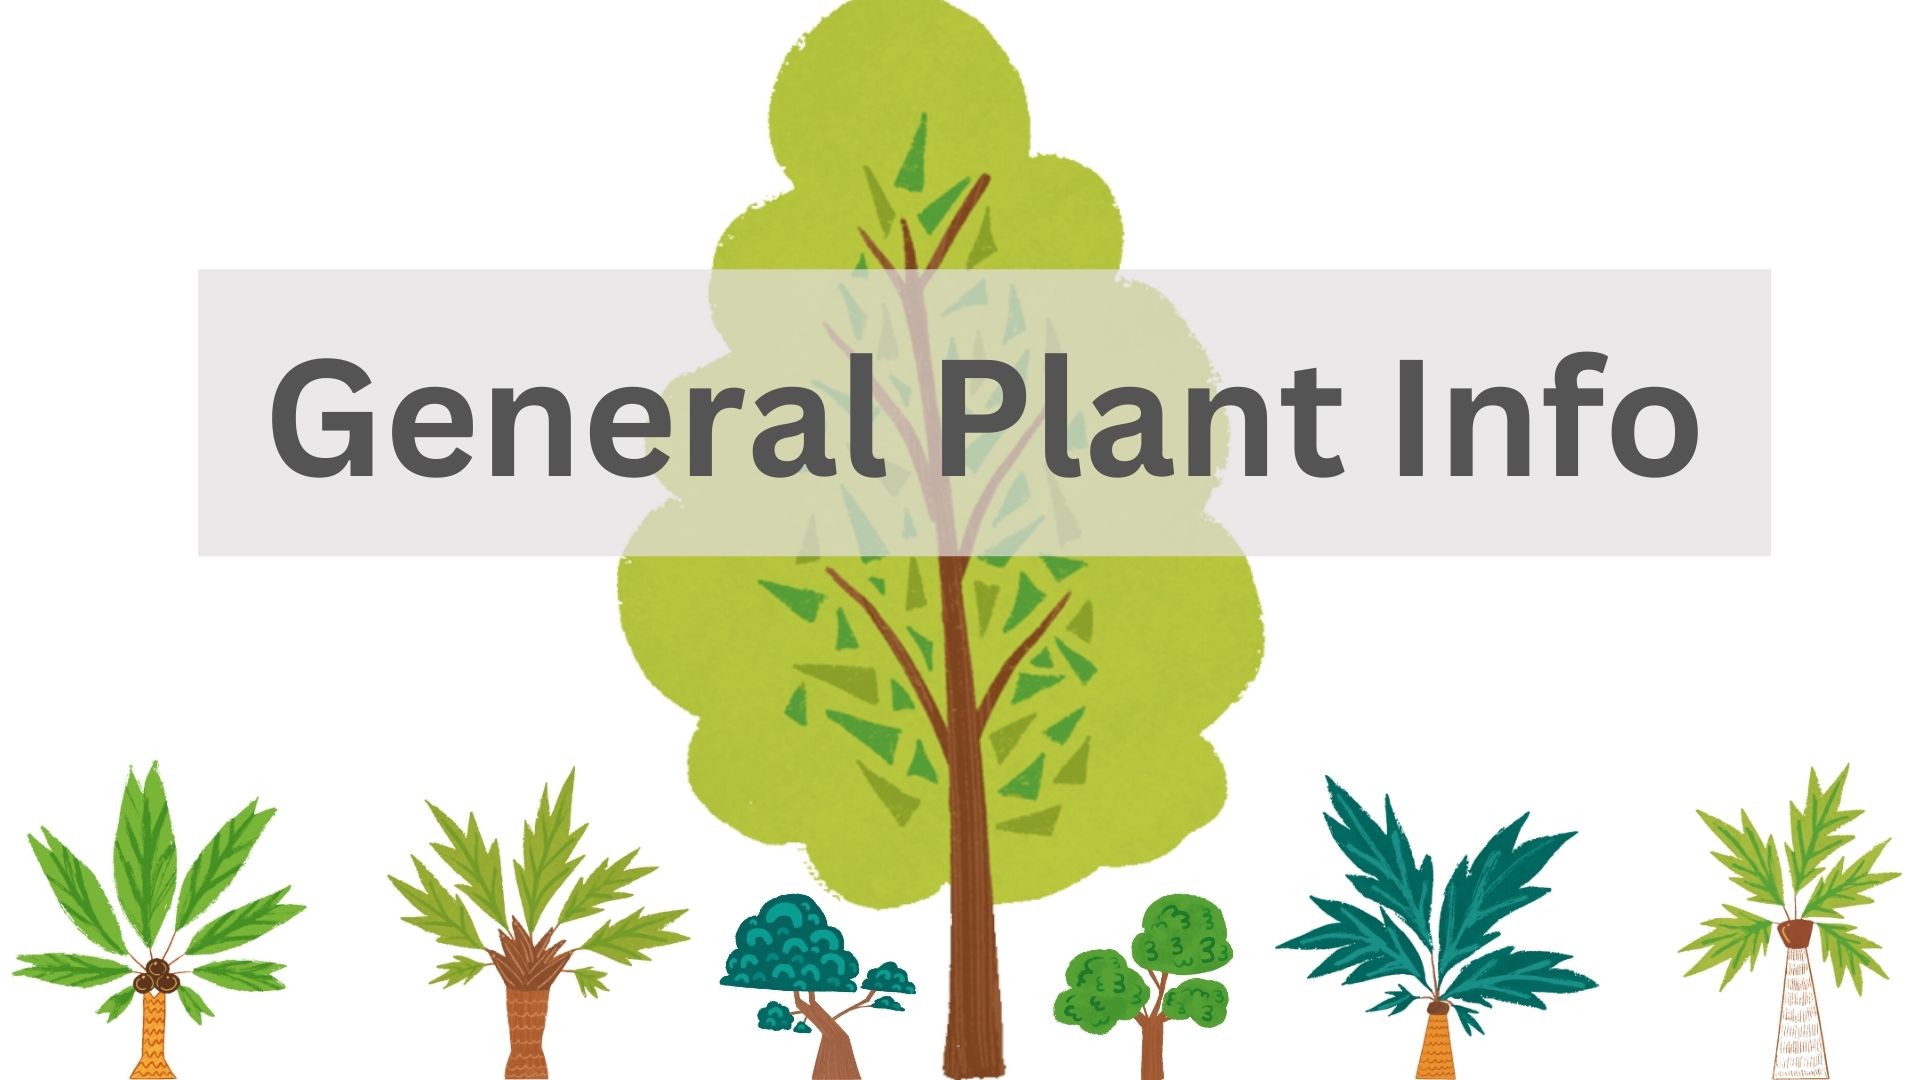 General plant info